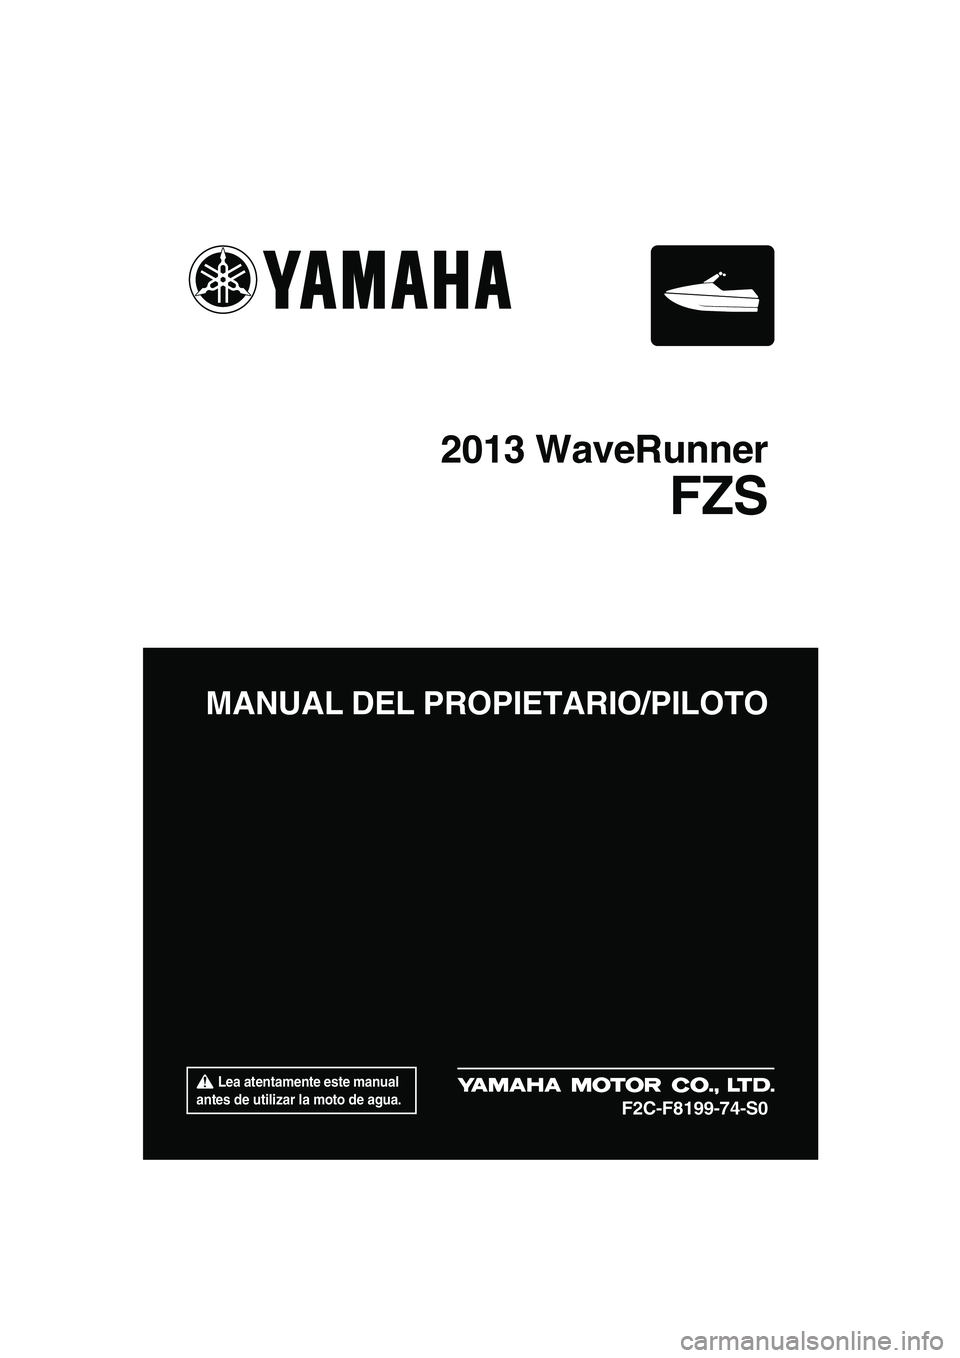 YAMAHA FZS 2013  Manuale de Empleo (in Spanish)  Lea atentamente este manual 
antes de utilizar la moto de agua.
MANUAL DEL PROPIETARIO/PILOTO
2013 WaveRunner
FZS
F2C-F8199-74-S0
UF2C74S0.book  Page 1  Tuesday, July 31, 2012  9:27 AM 